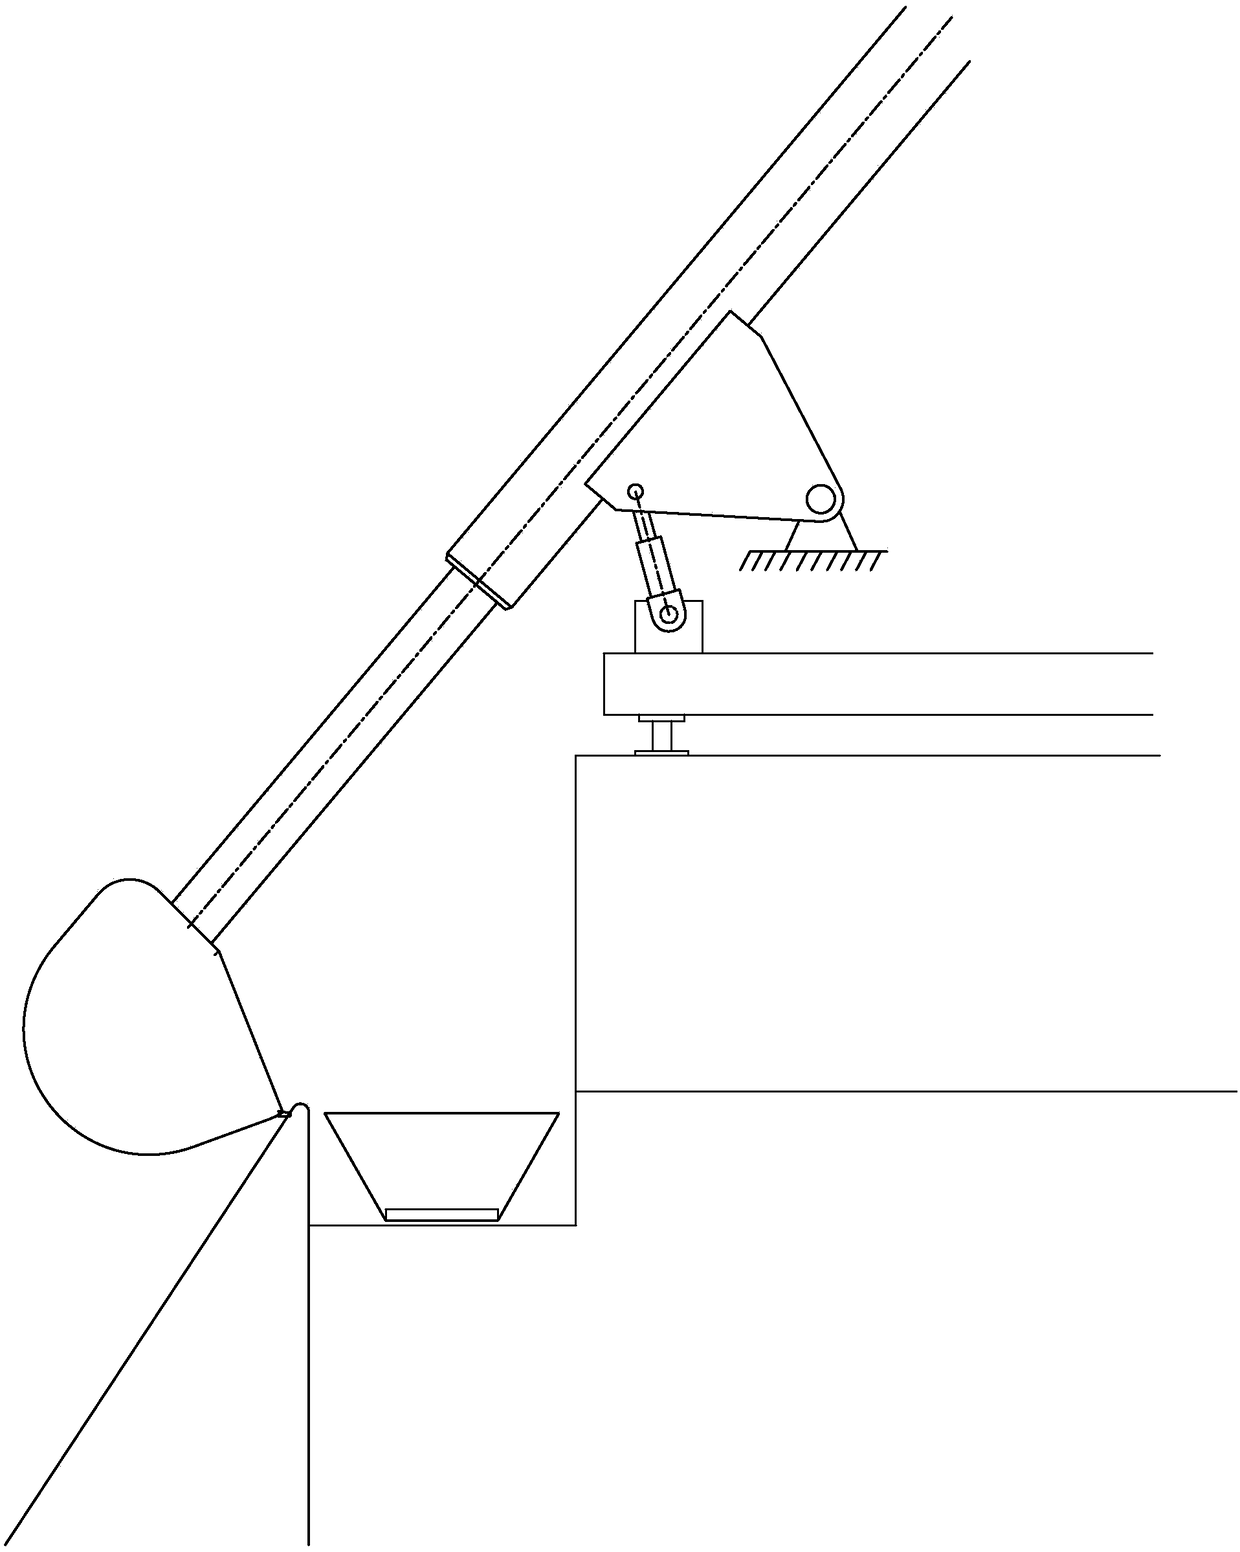 A bucket mechanism of telescopic arm type grid decontamination machine